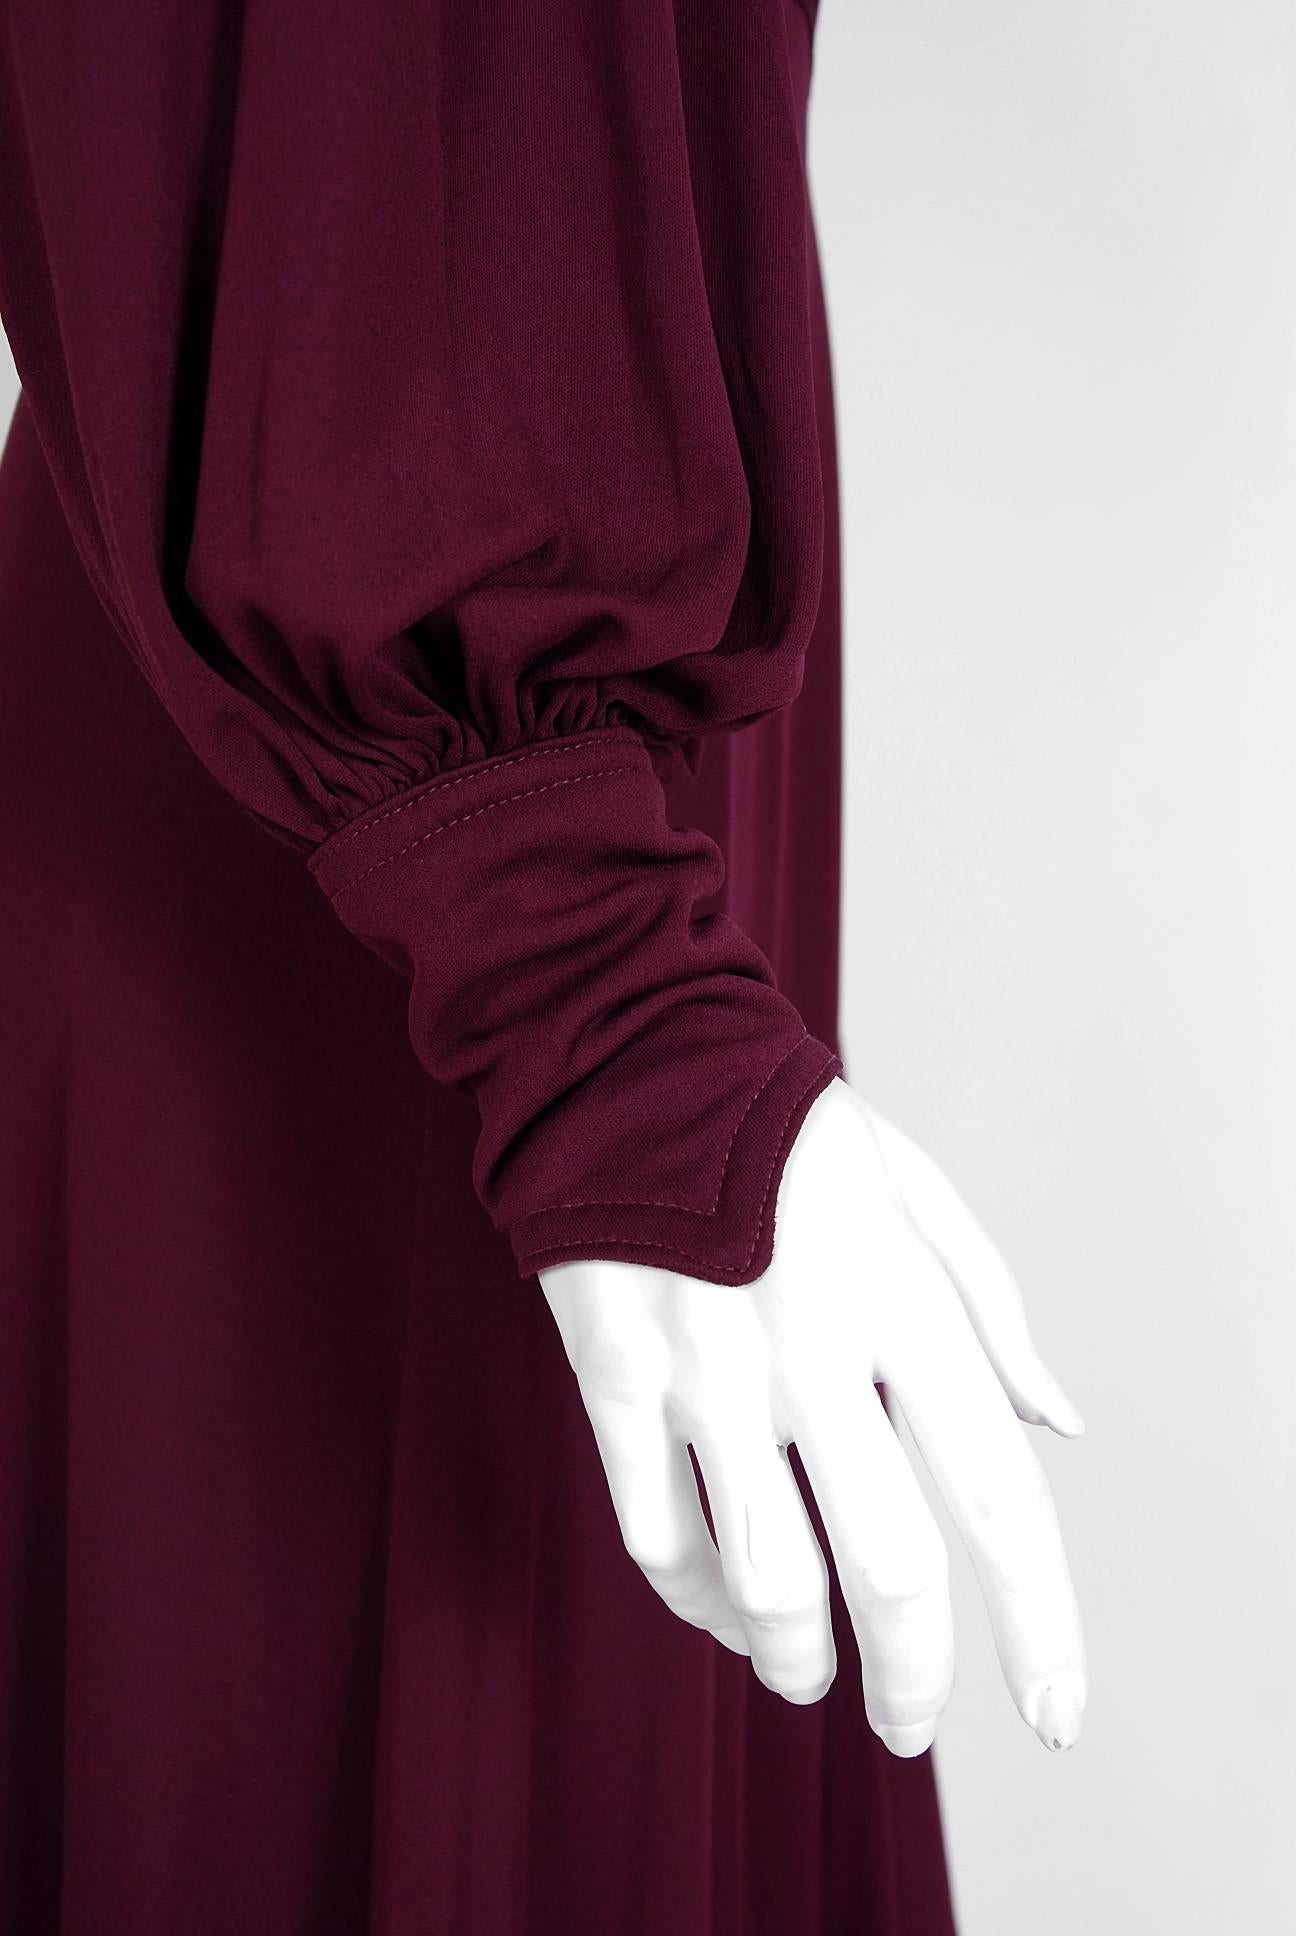 Black 1969 Ossie Clark for Quorum Plum Purple Ruched Silk Jersey Billow-Sleeve Dress